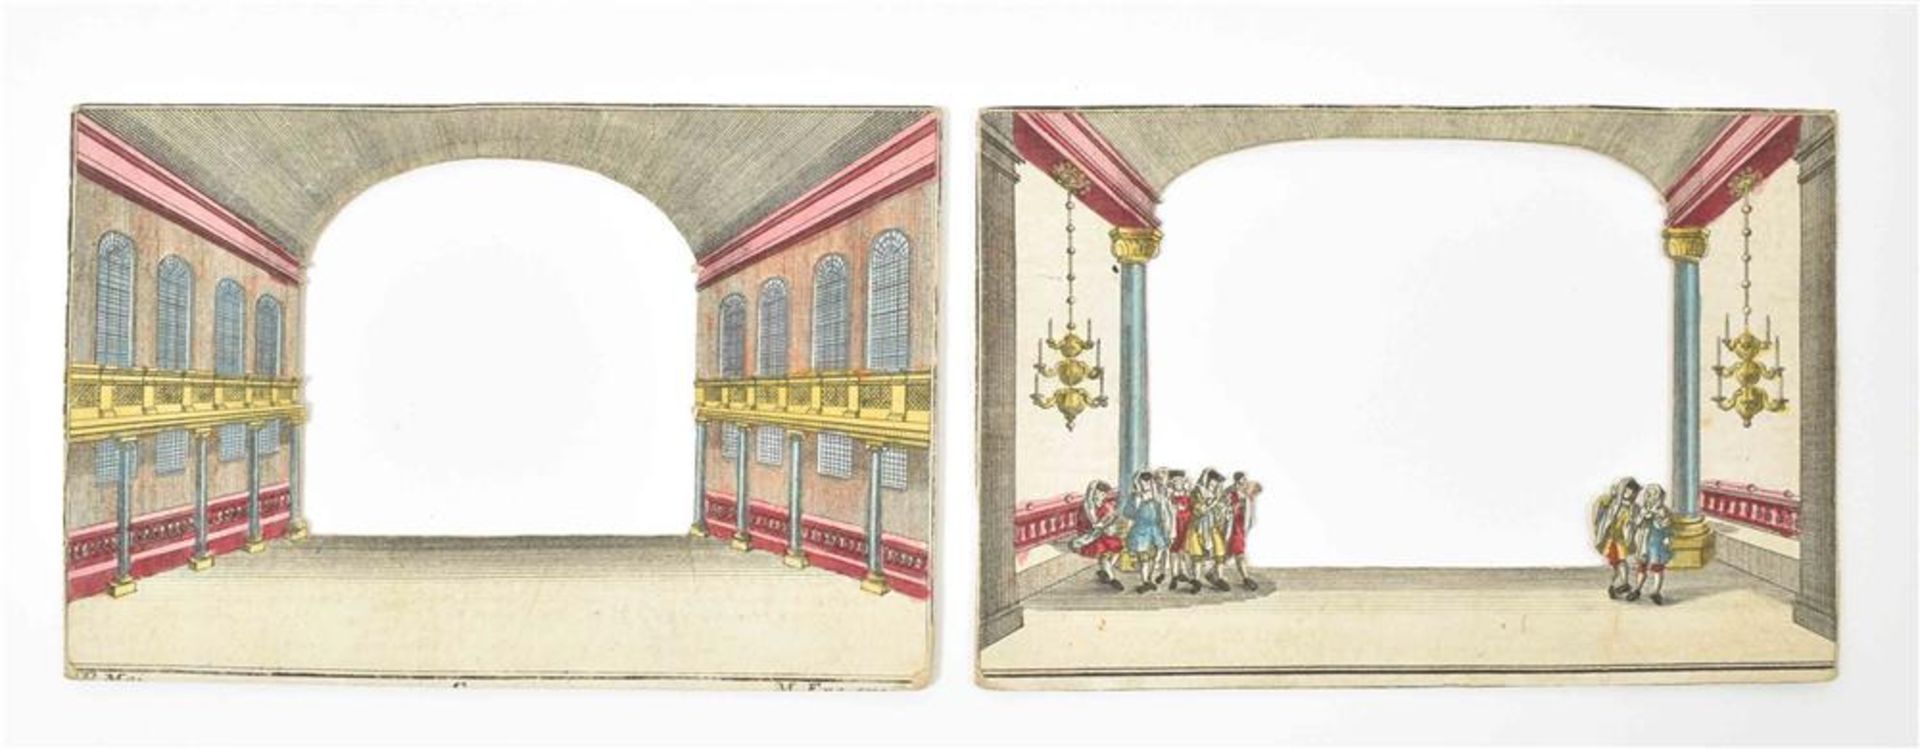 [Diorama/Paper theatre] The Synagoge - Image 8 of 8